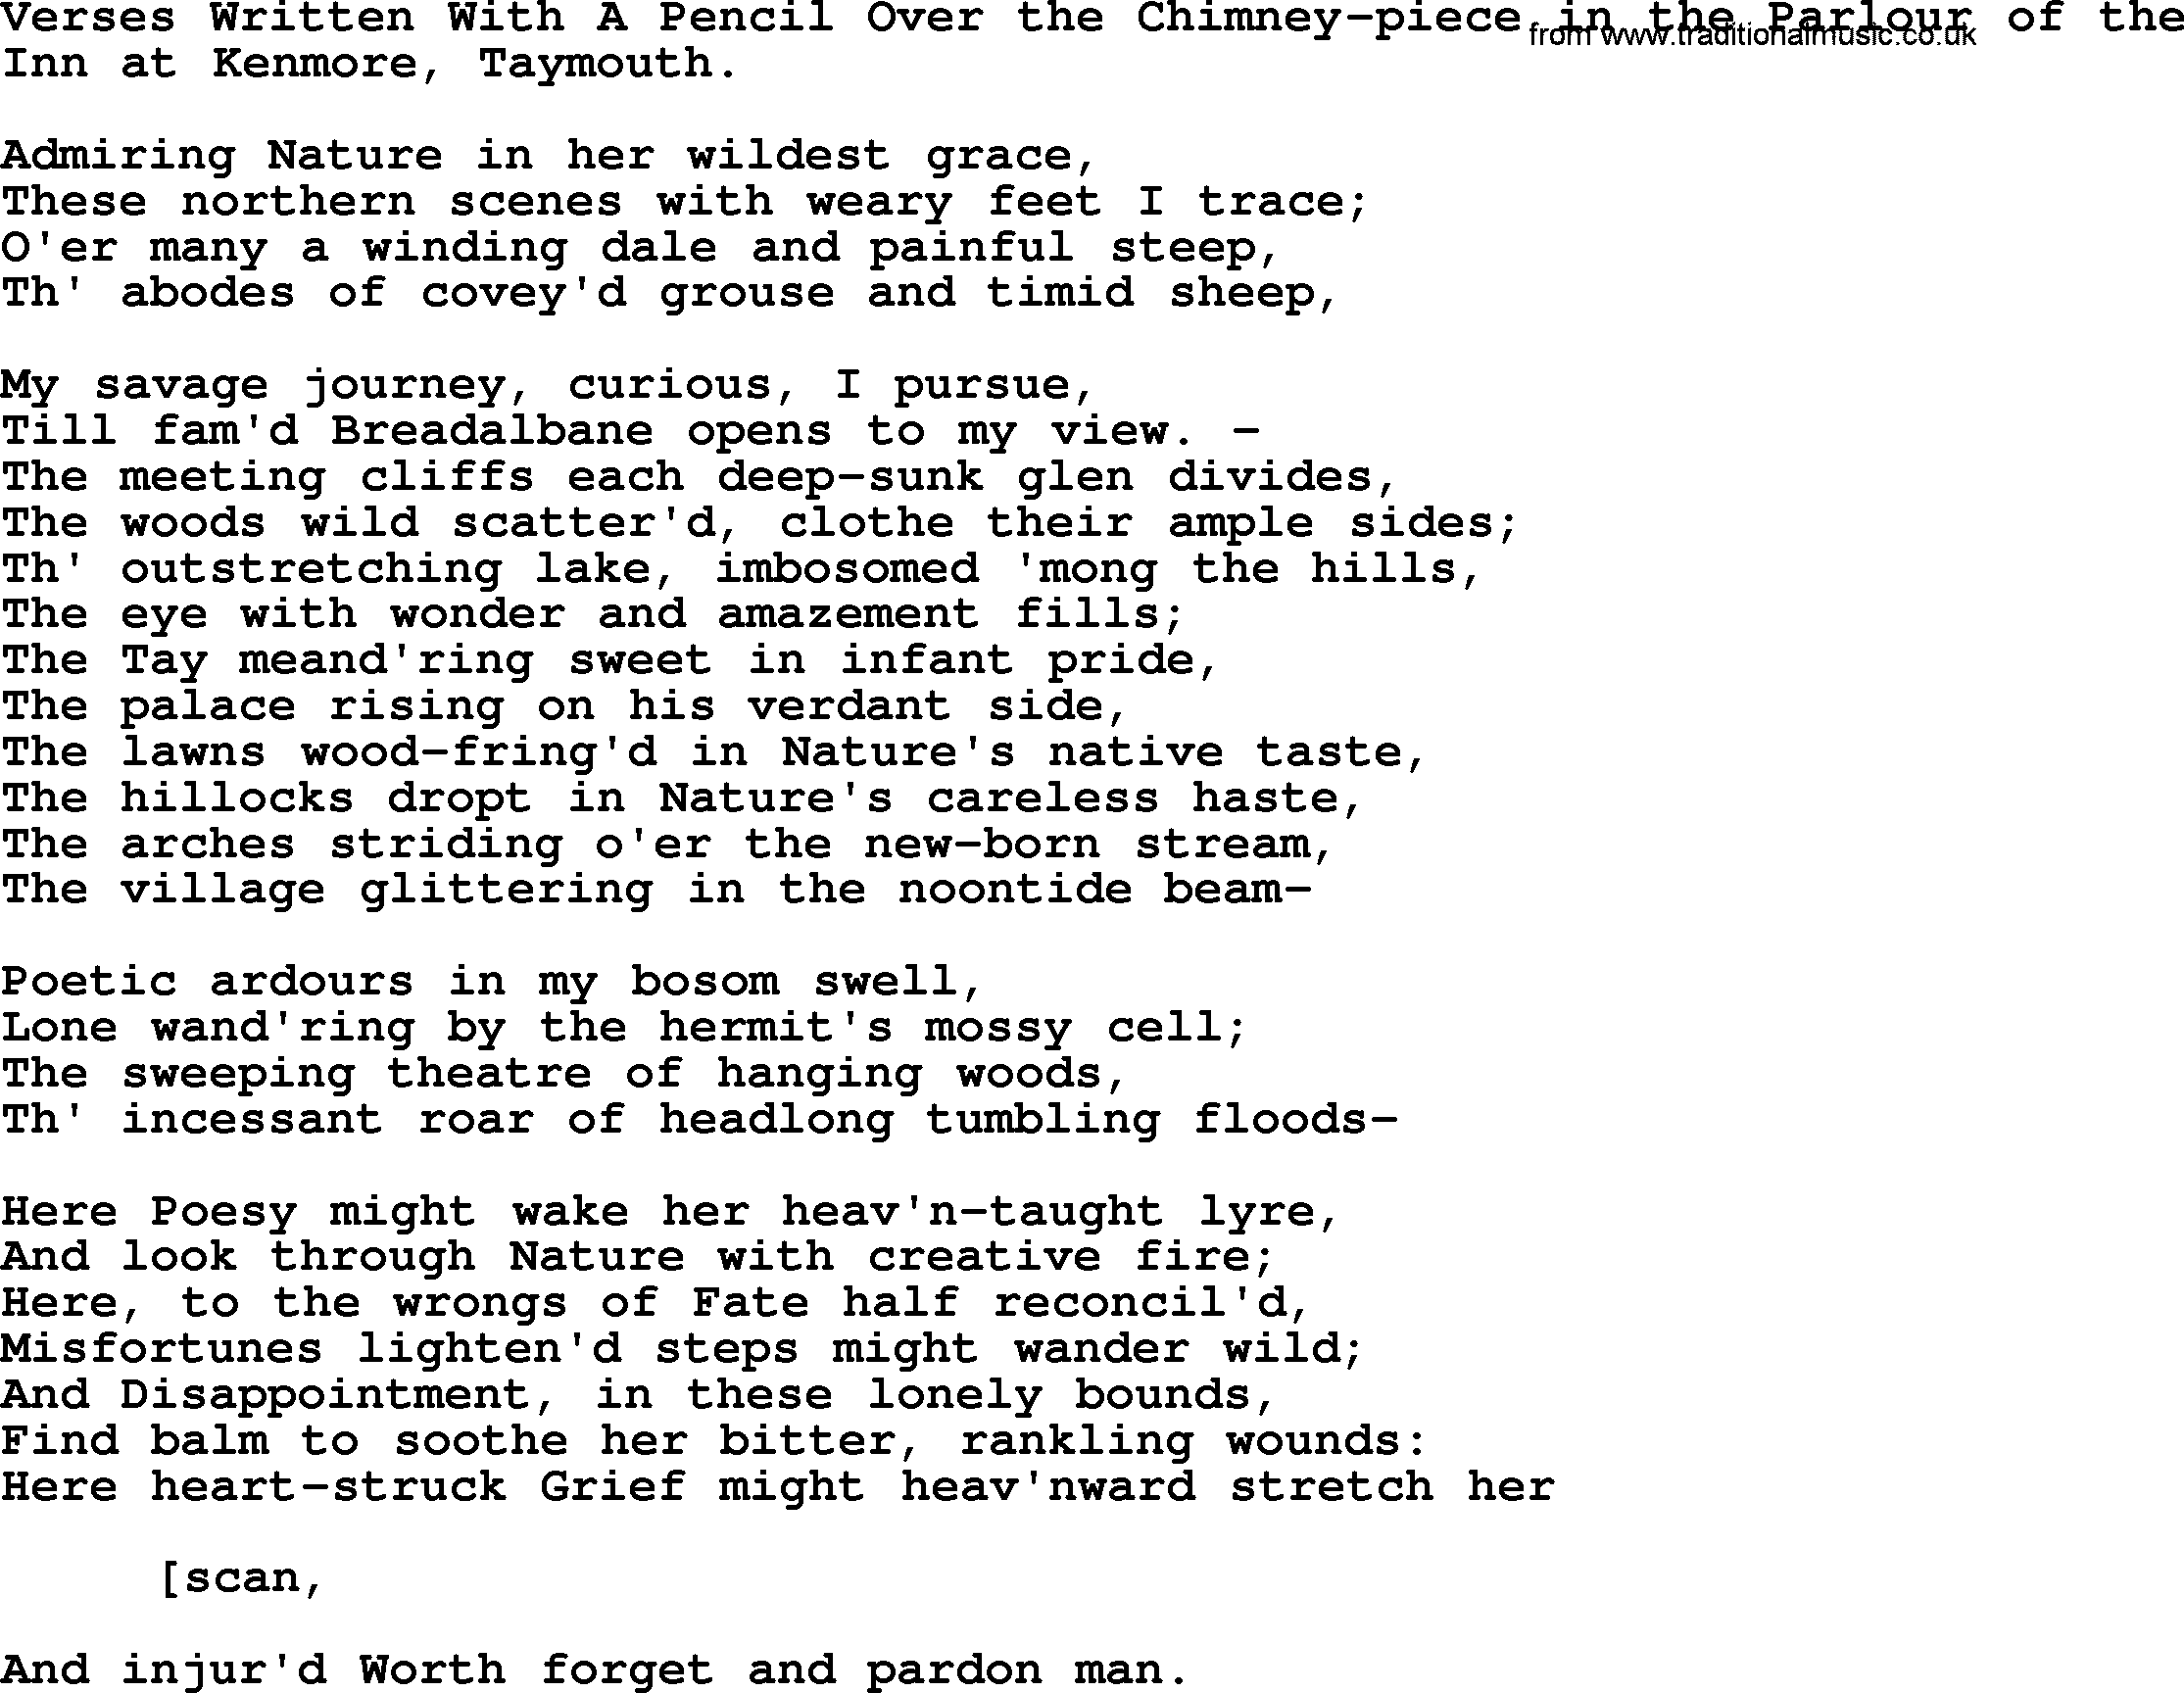 Robert Burns Songs & Lyrics: Verses Written With A Pencil